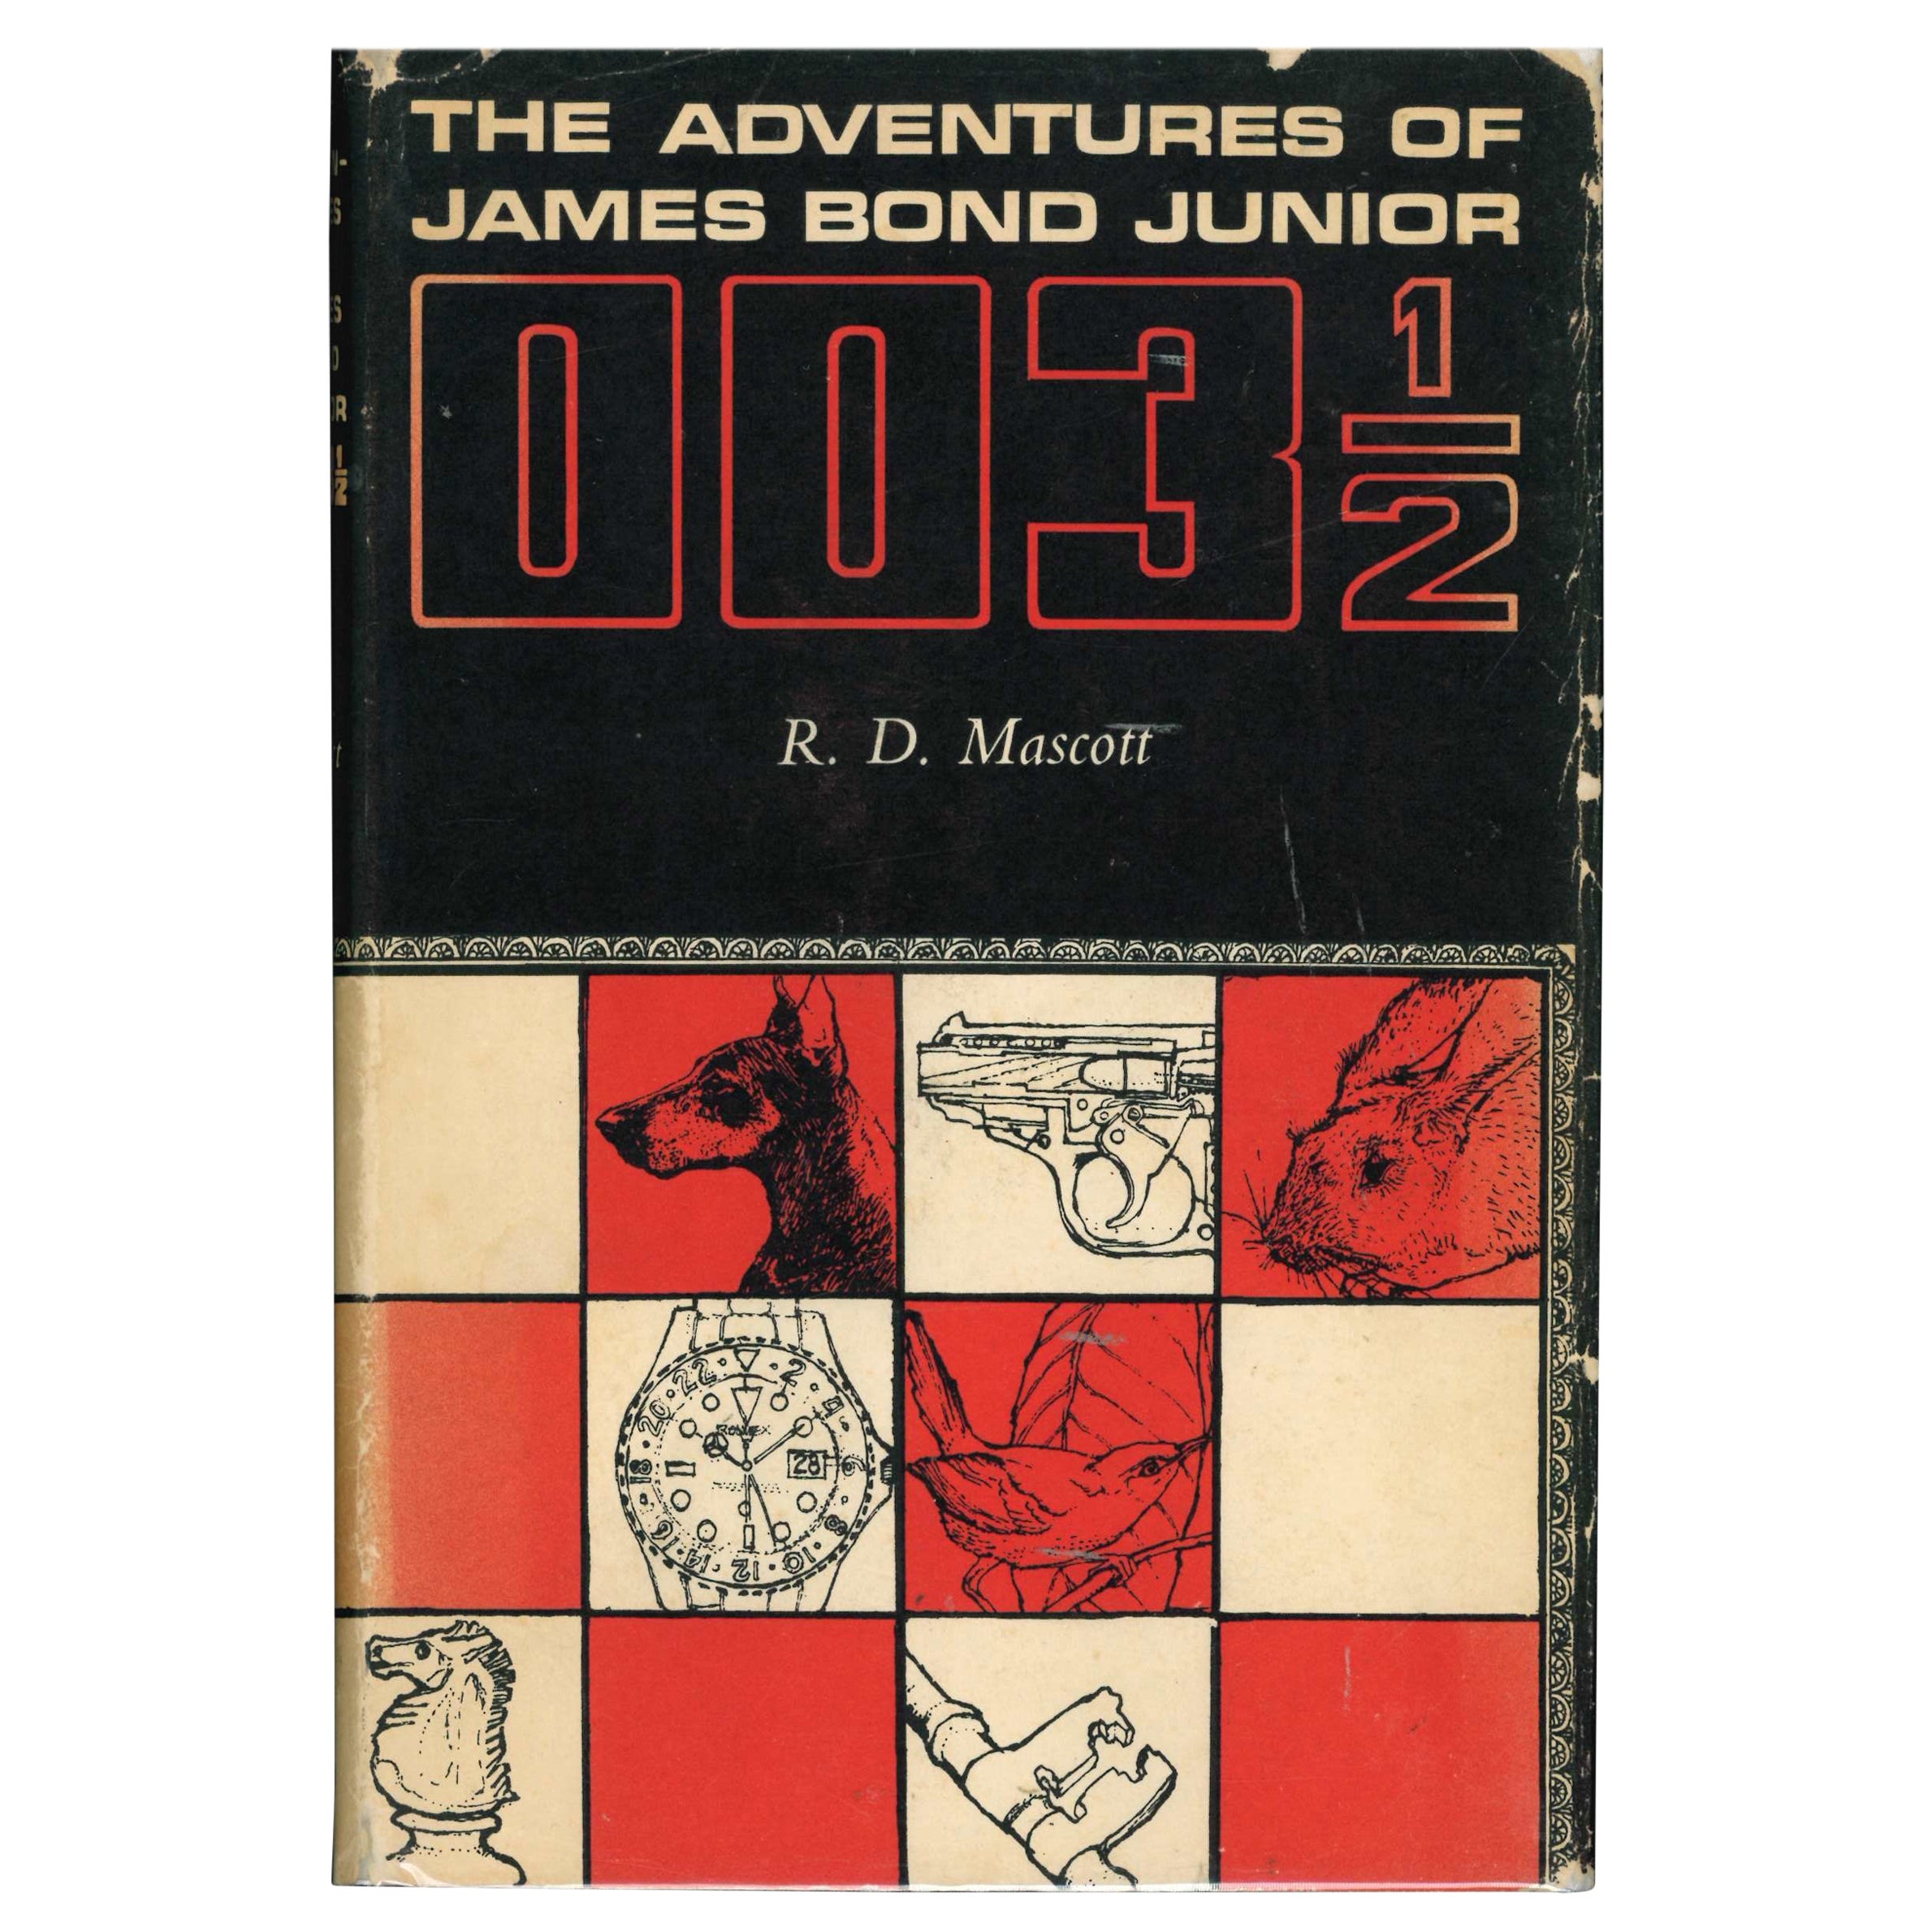 The Adventures of James Bond Junior 003 1/2 by R. D. Mascott (Book)